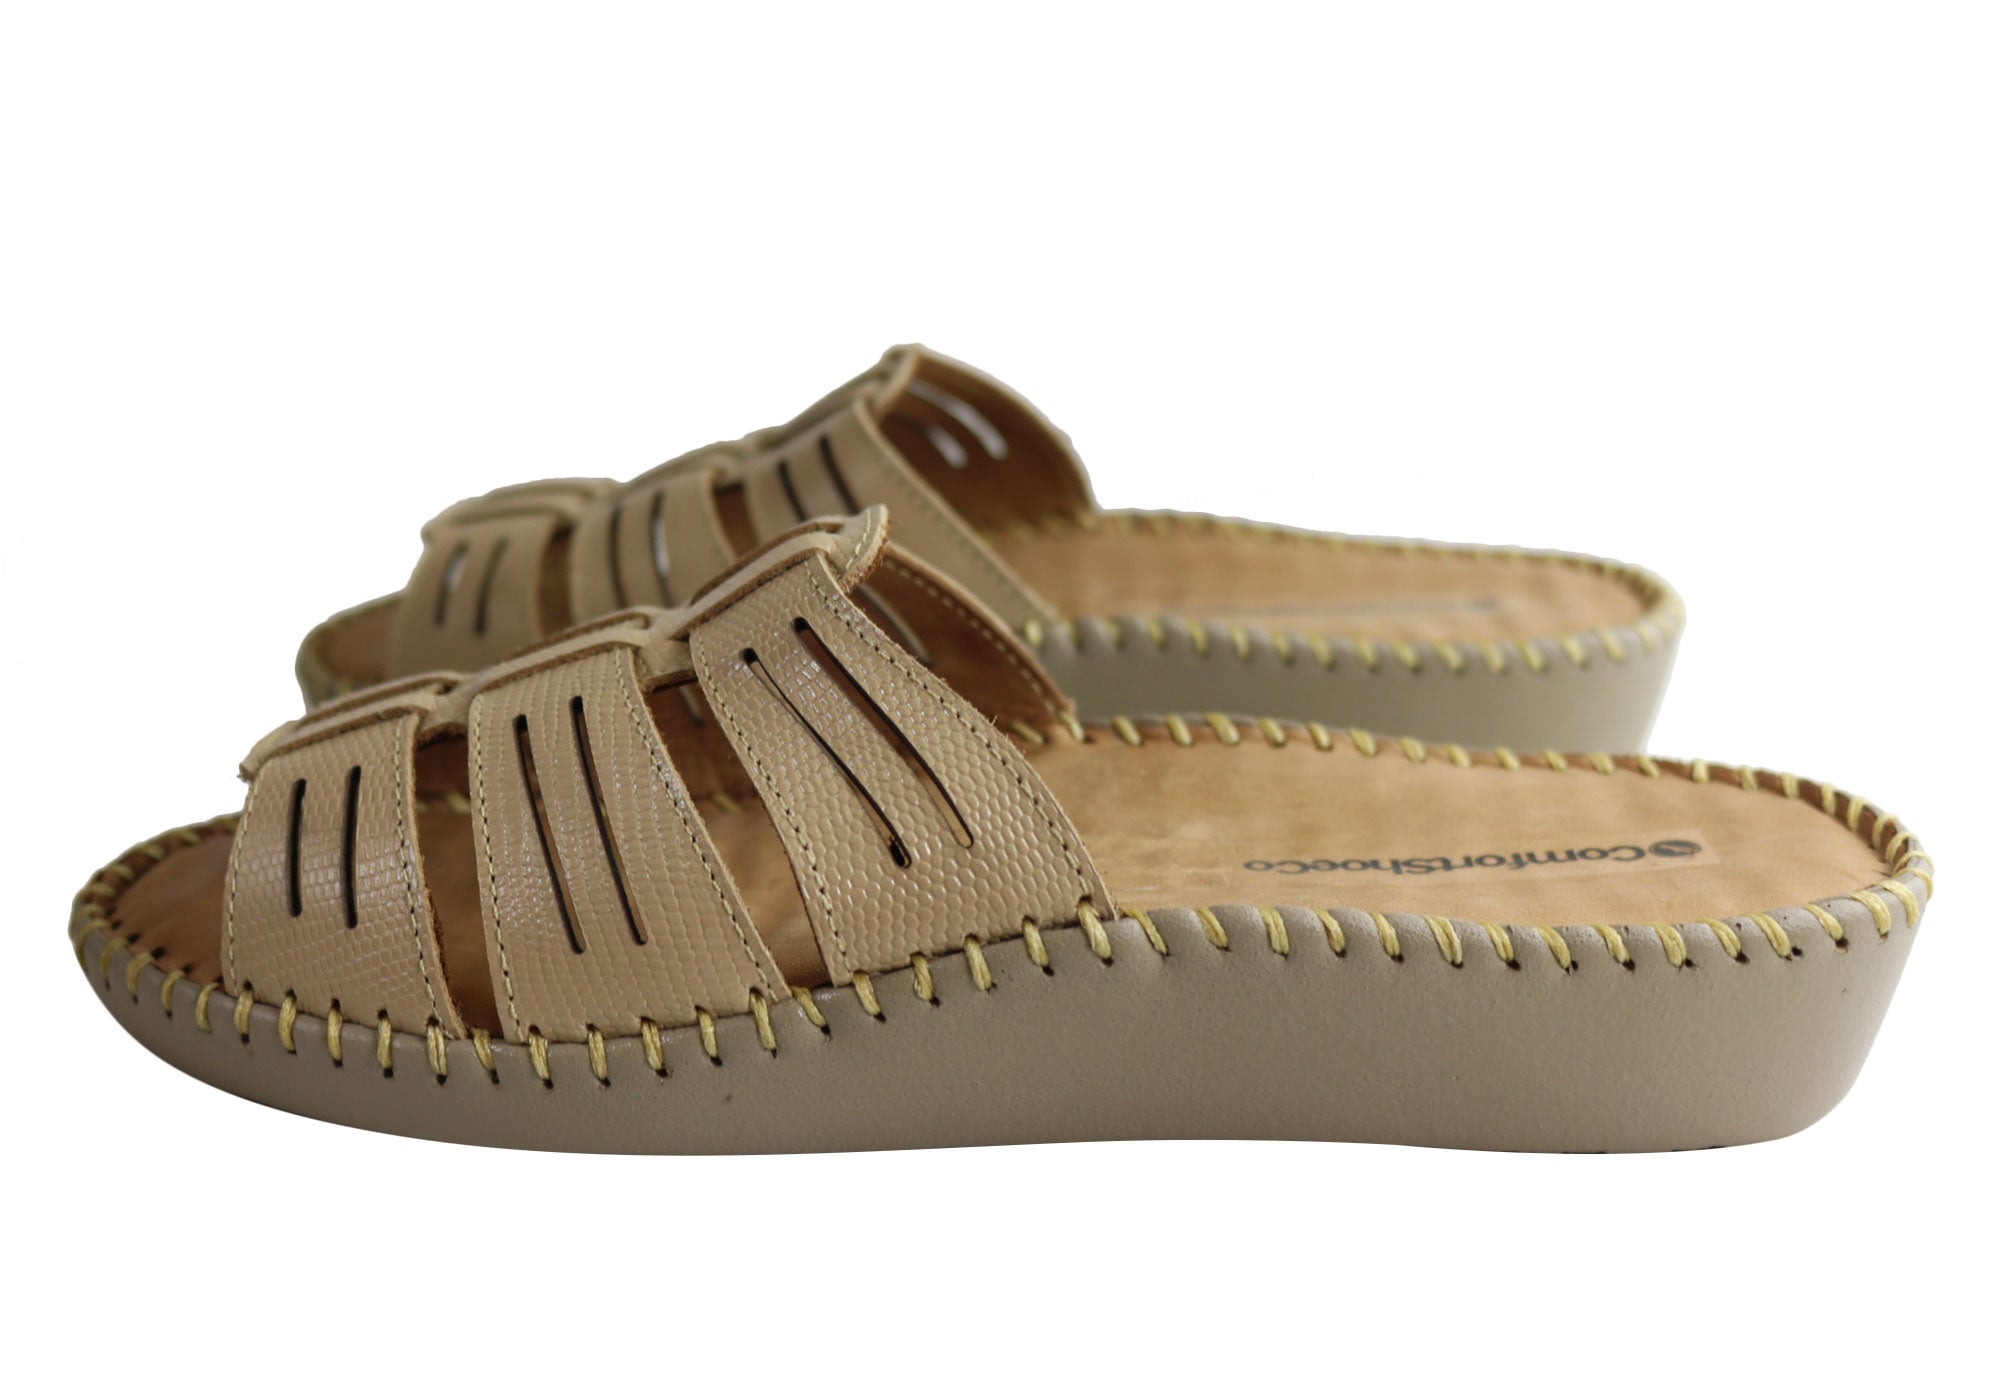 Comfortshoeco Renee Womens Leather Brazilian Comfort Slides Sandals